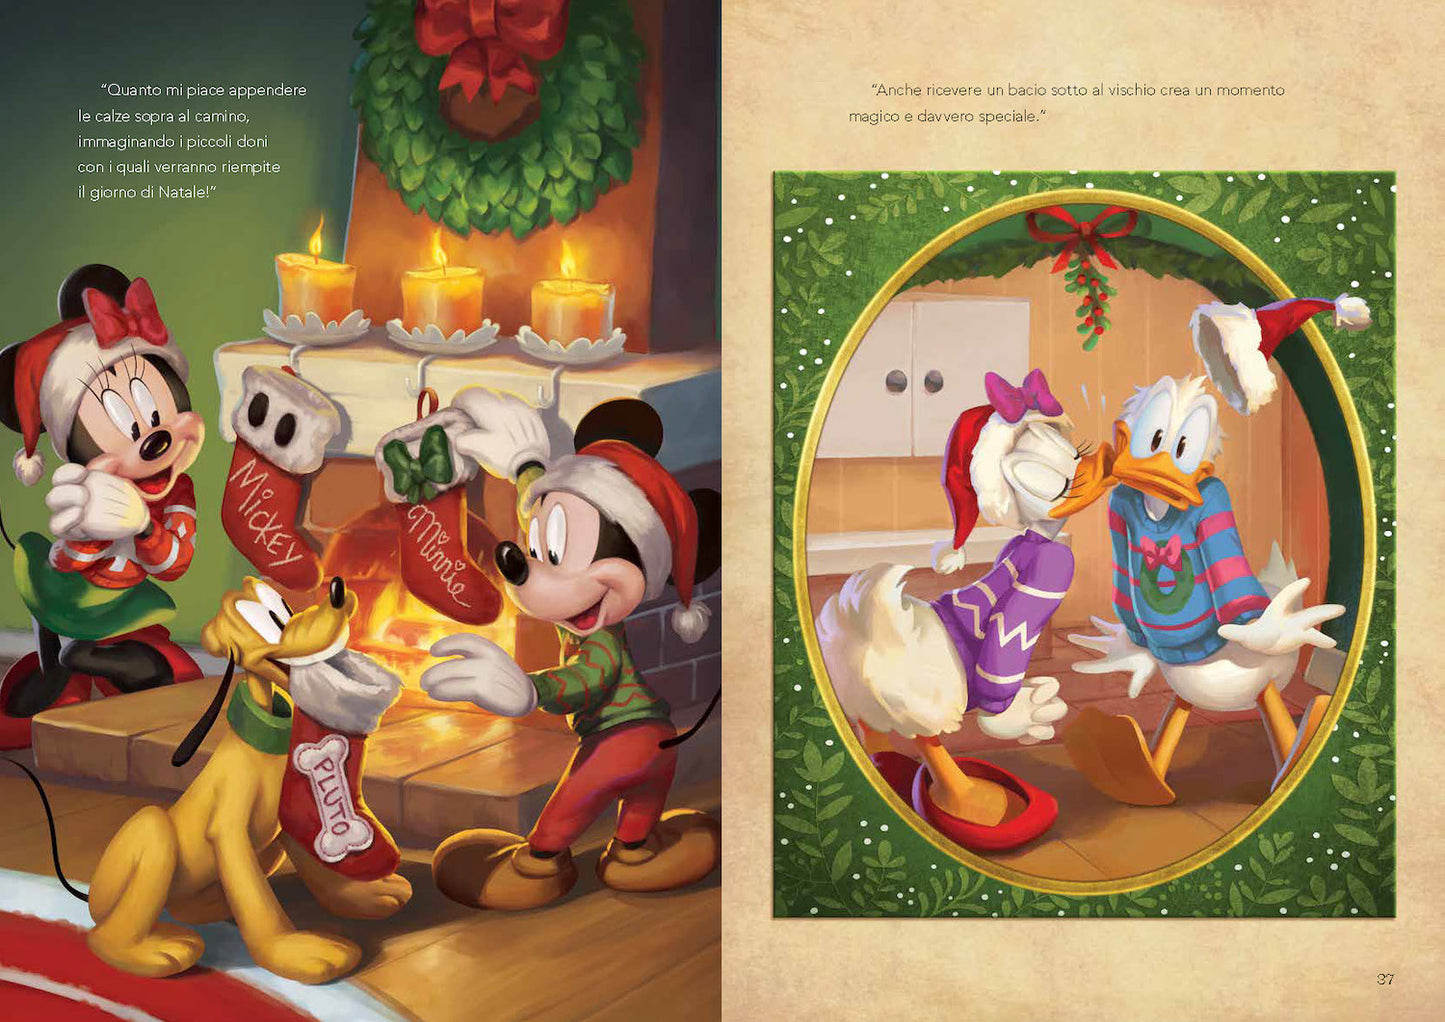 Disney Un magico Natale